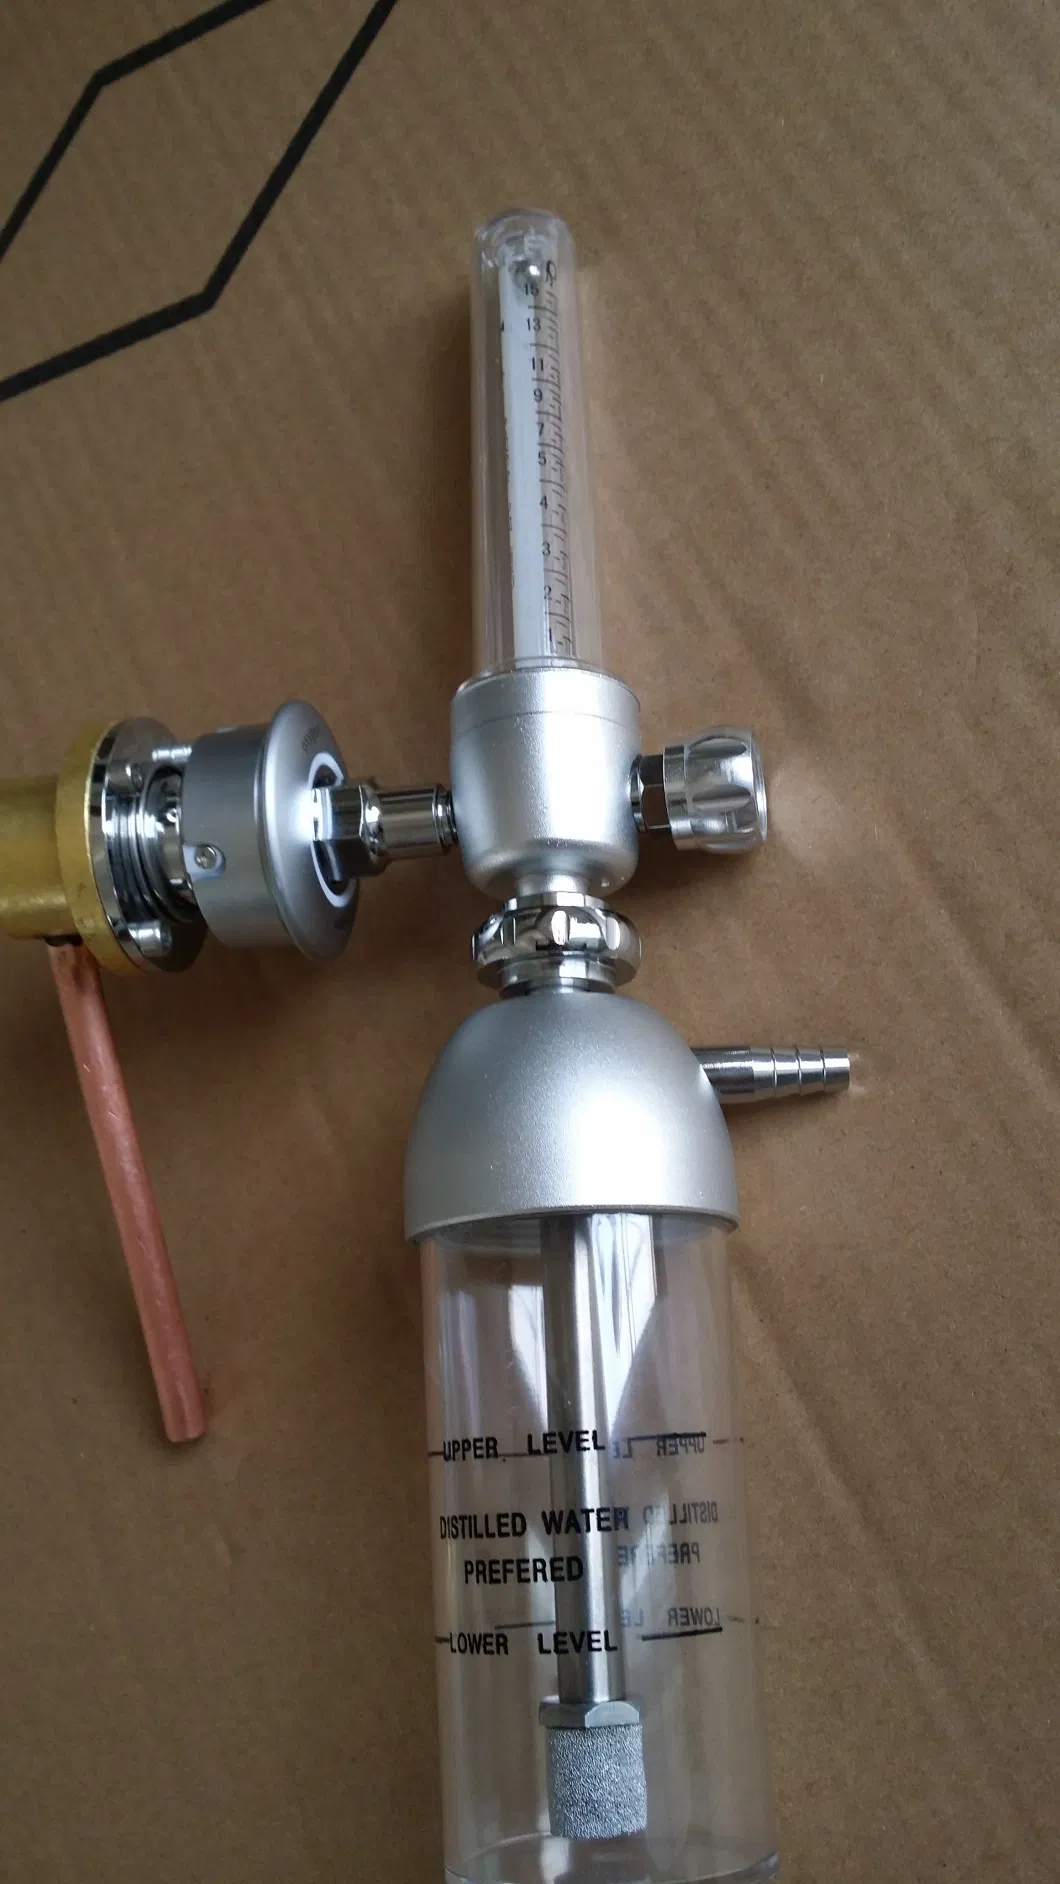 Lw-Flm-4 Medical Oxygen Flowmeter with Humidifier Bottle